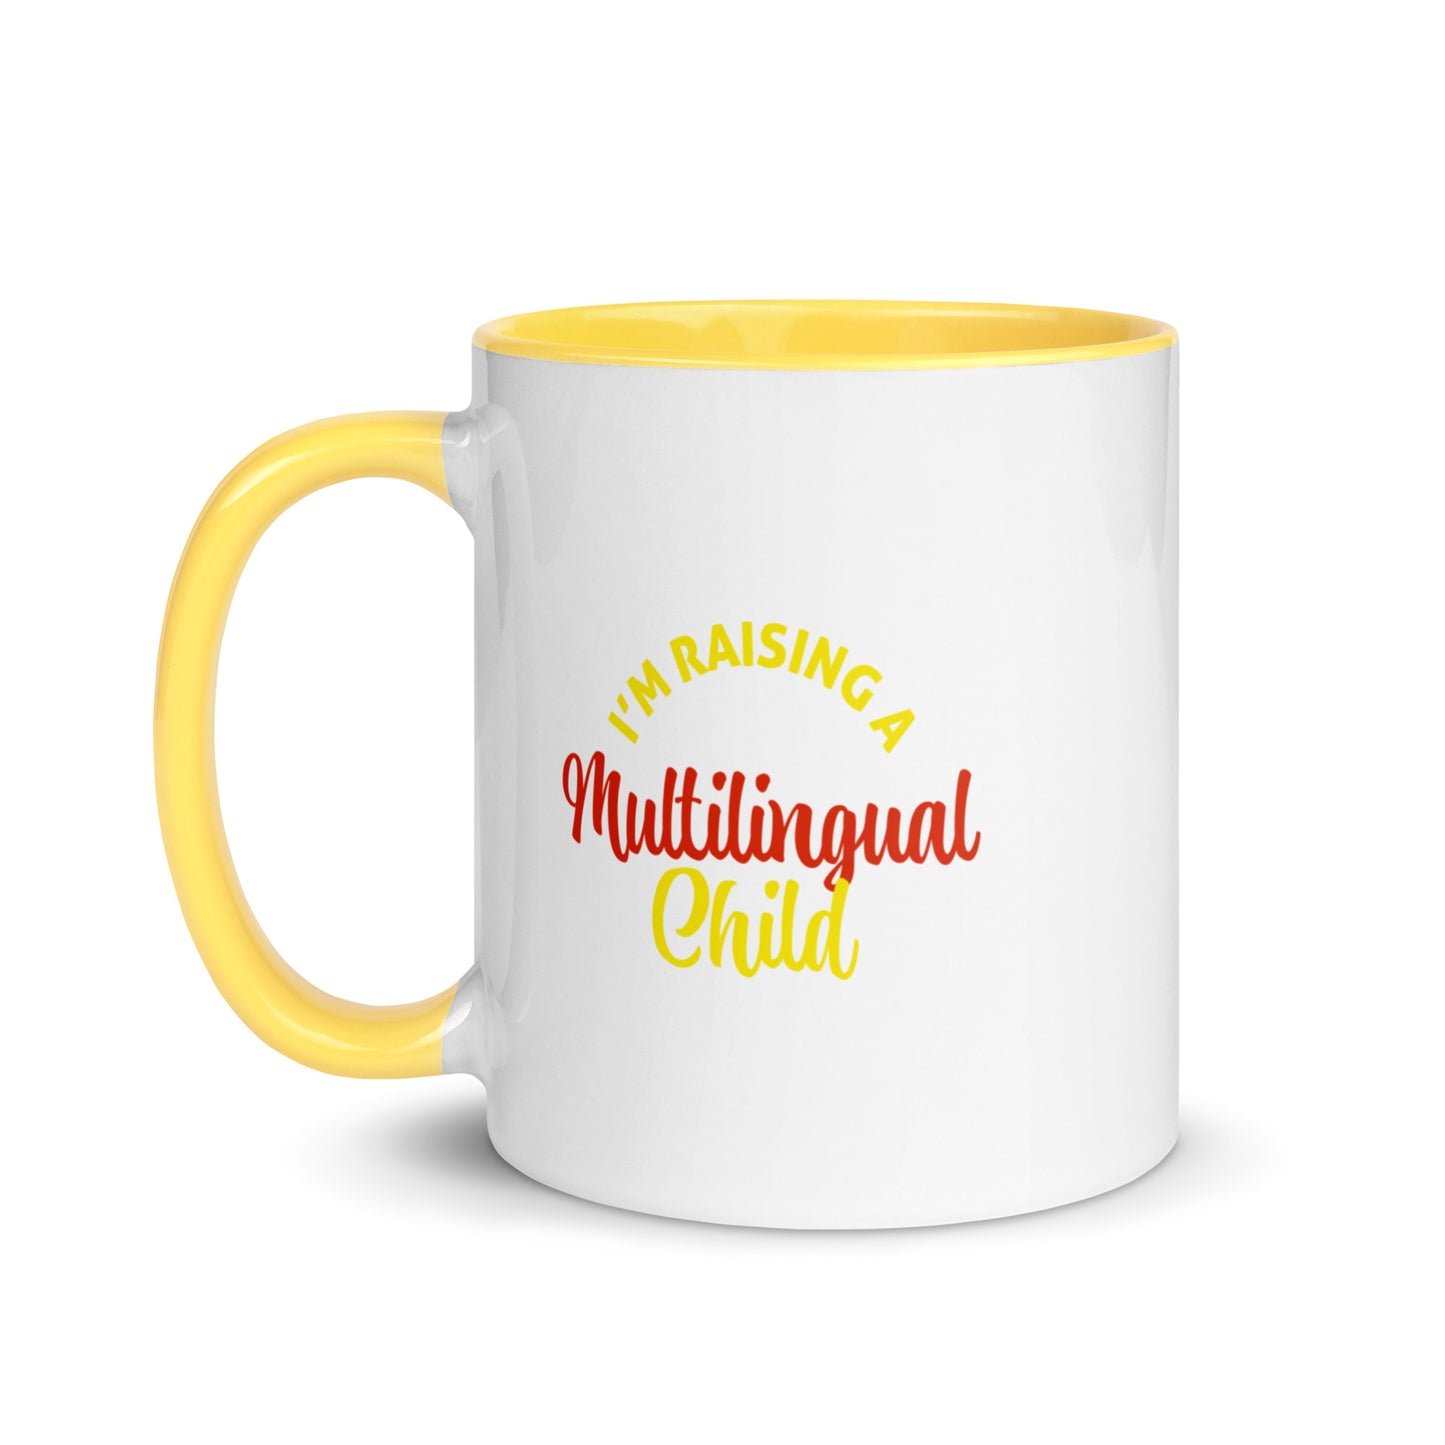 Raising Multilingual Mug with Color Inside.